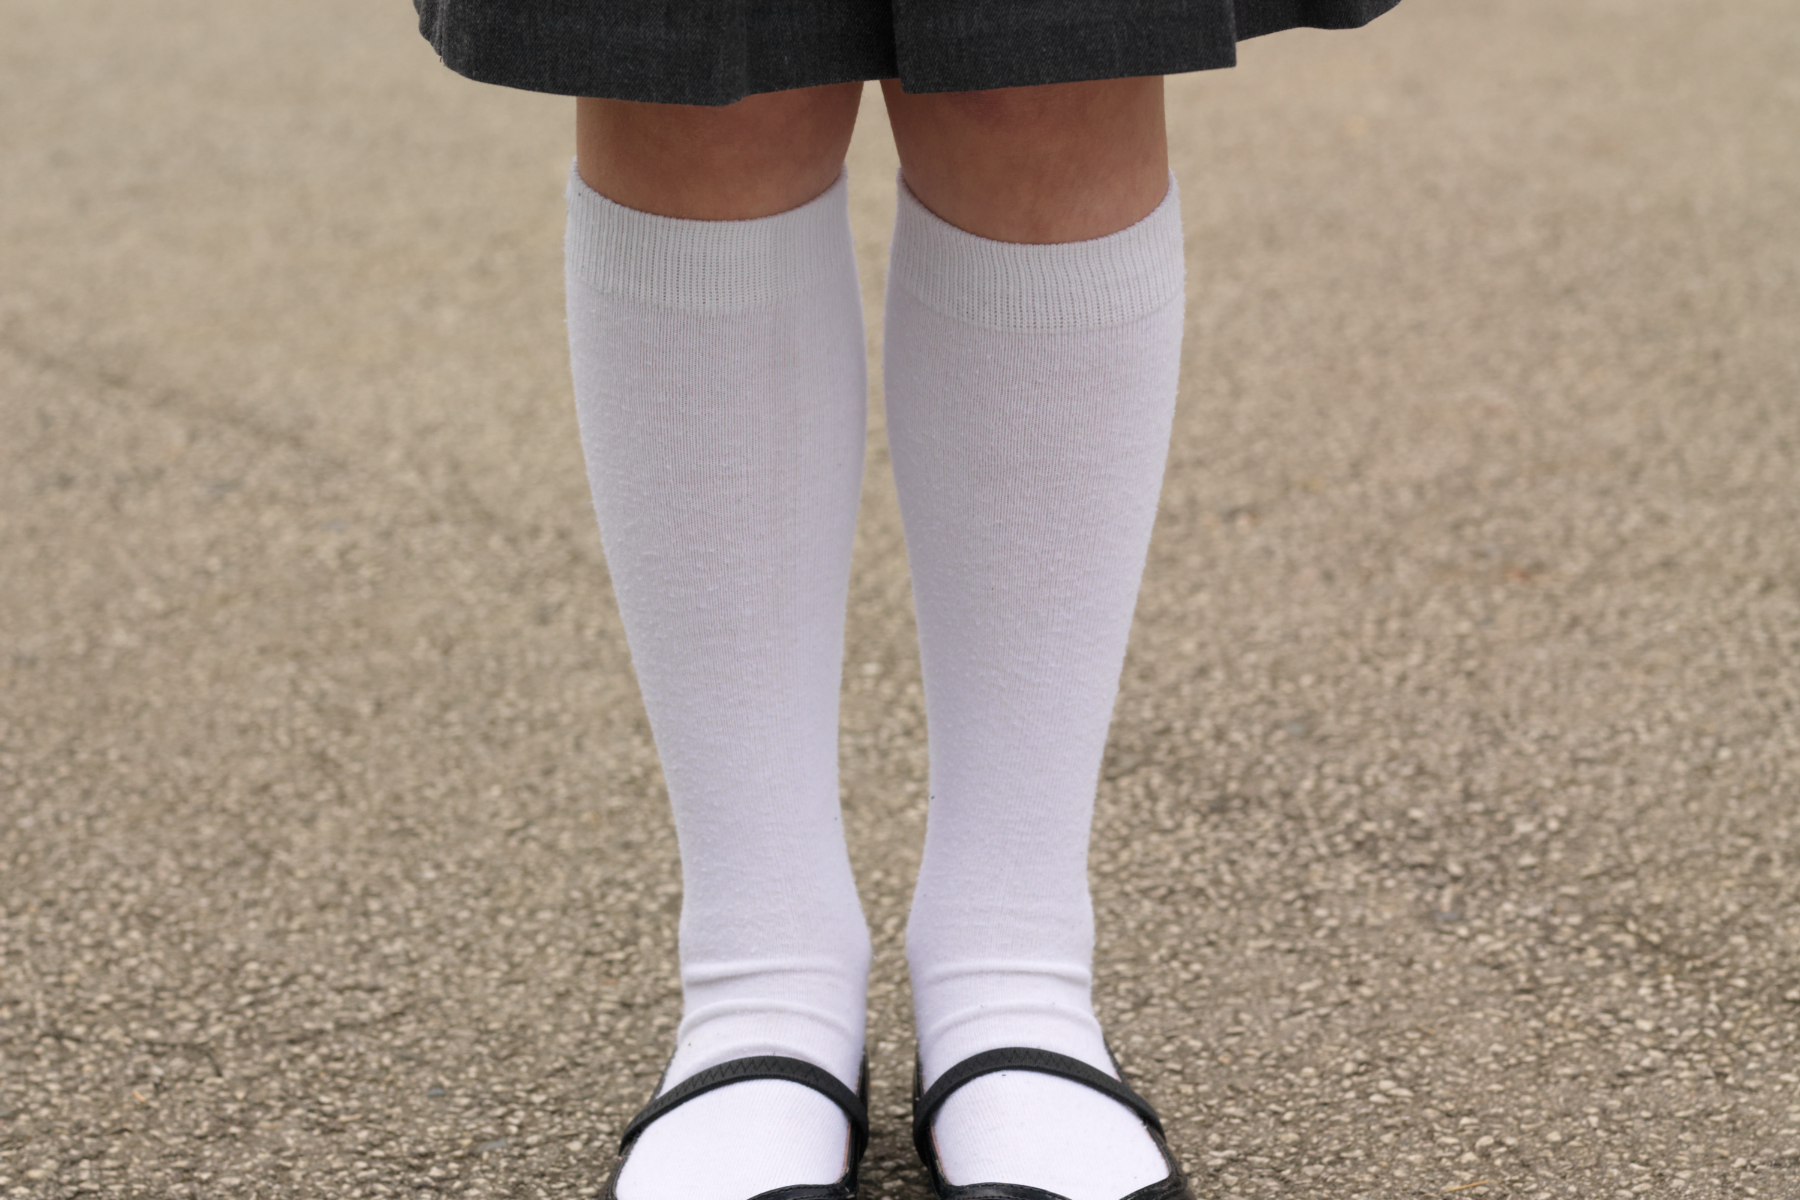 A school girl with knee-high white socks